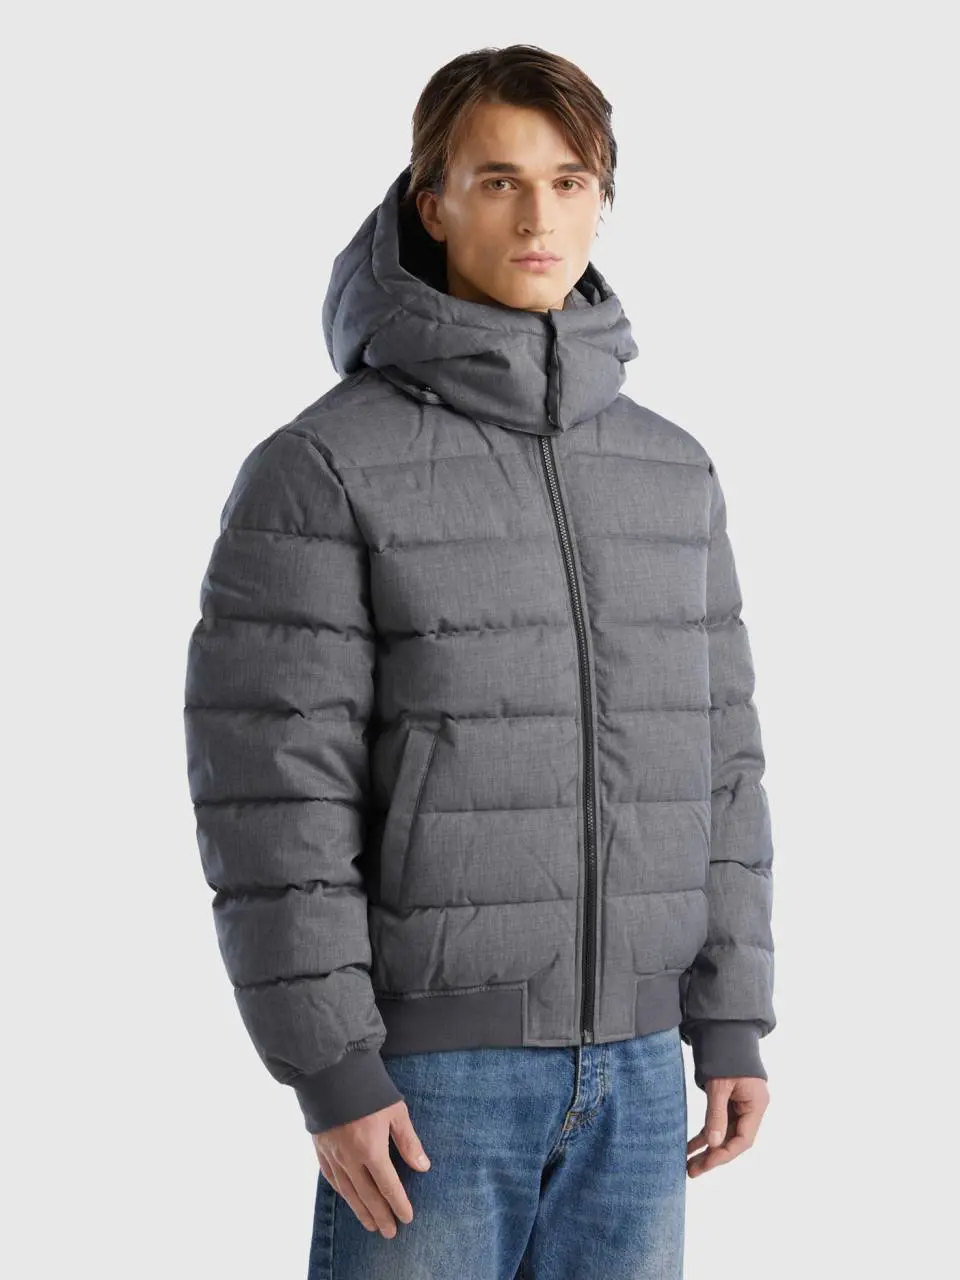 Benetton short padded jacket with detachable hood. 1